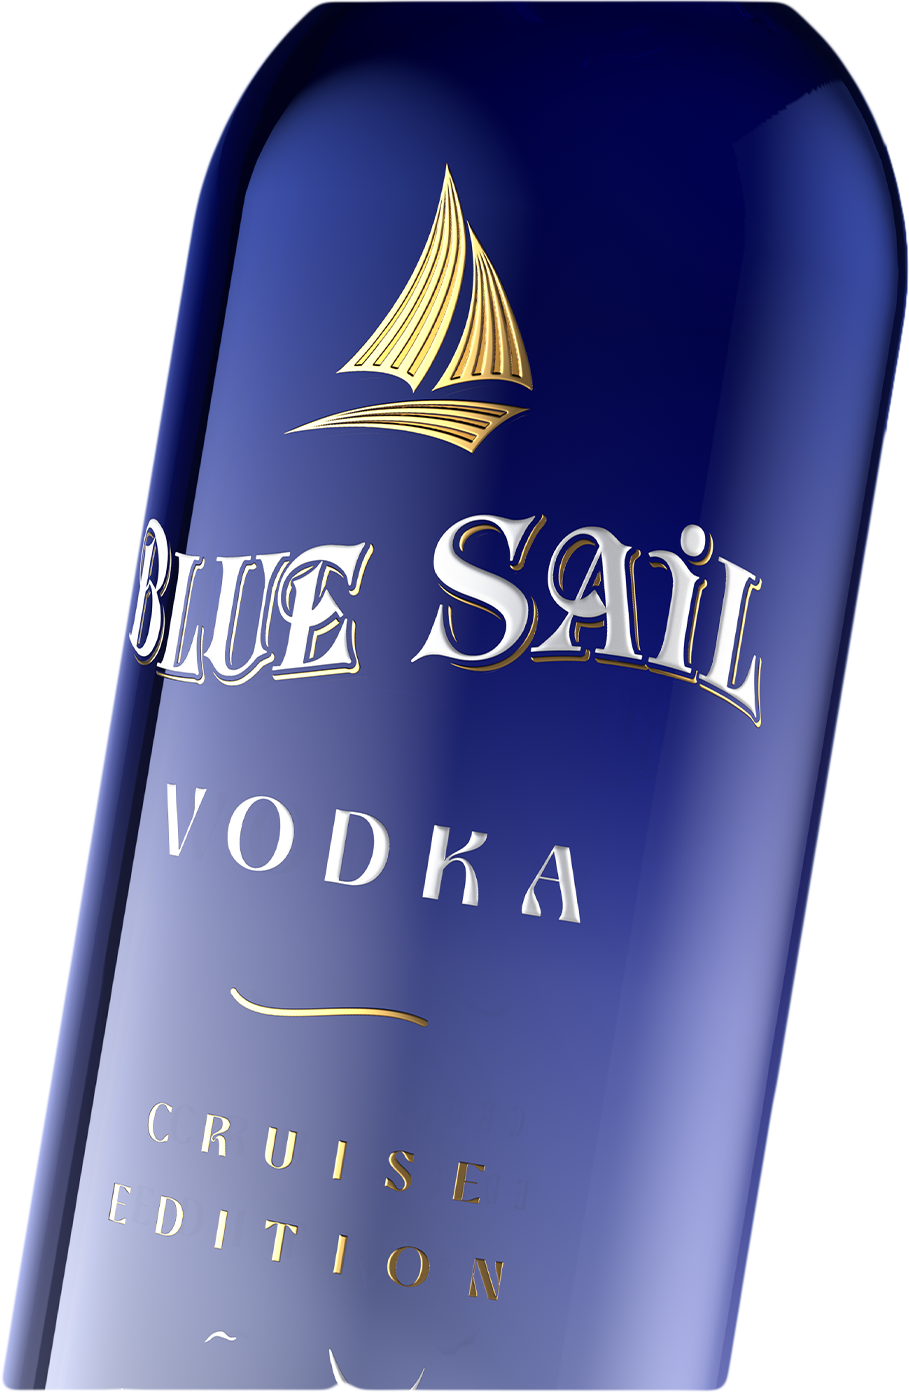 Bottle of Blue Sail